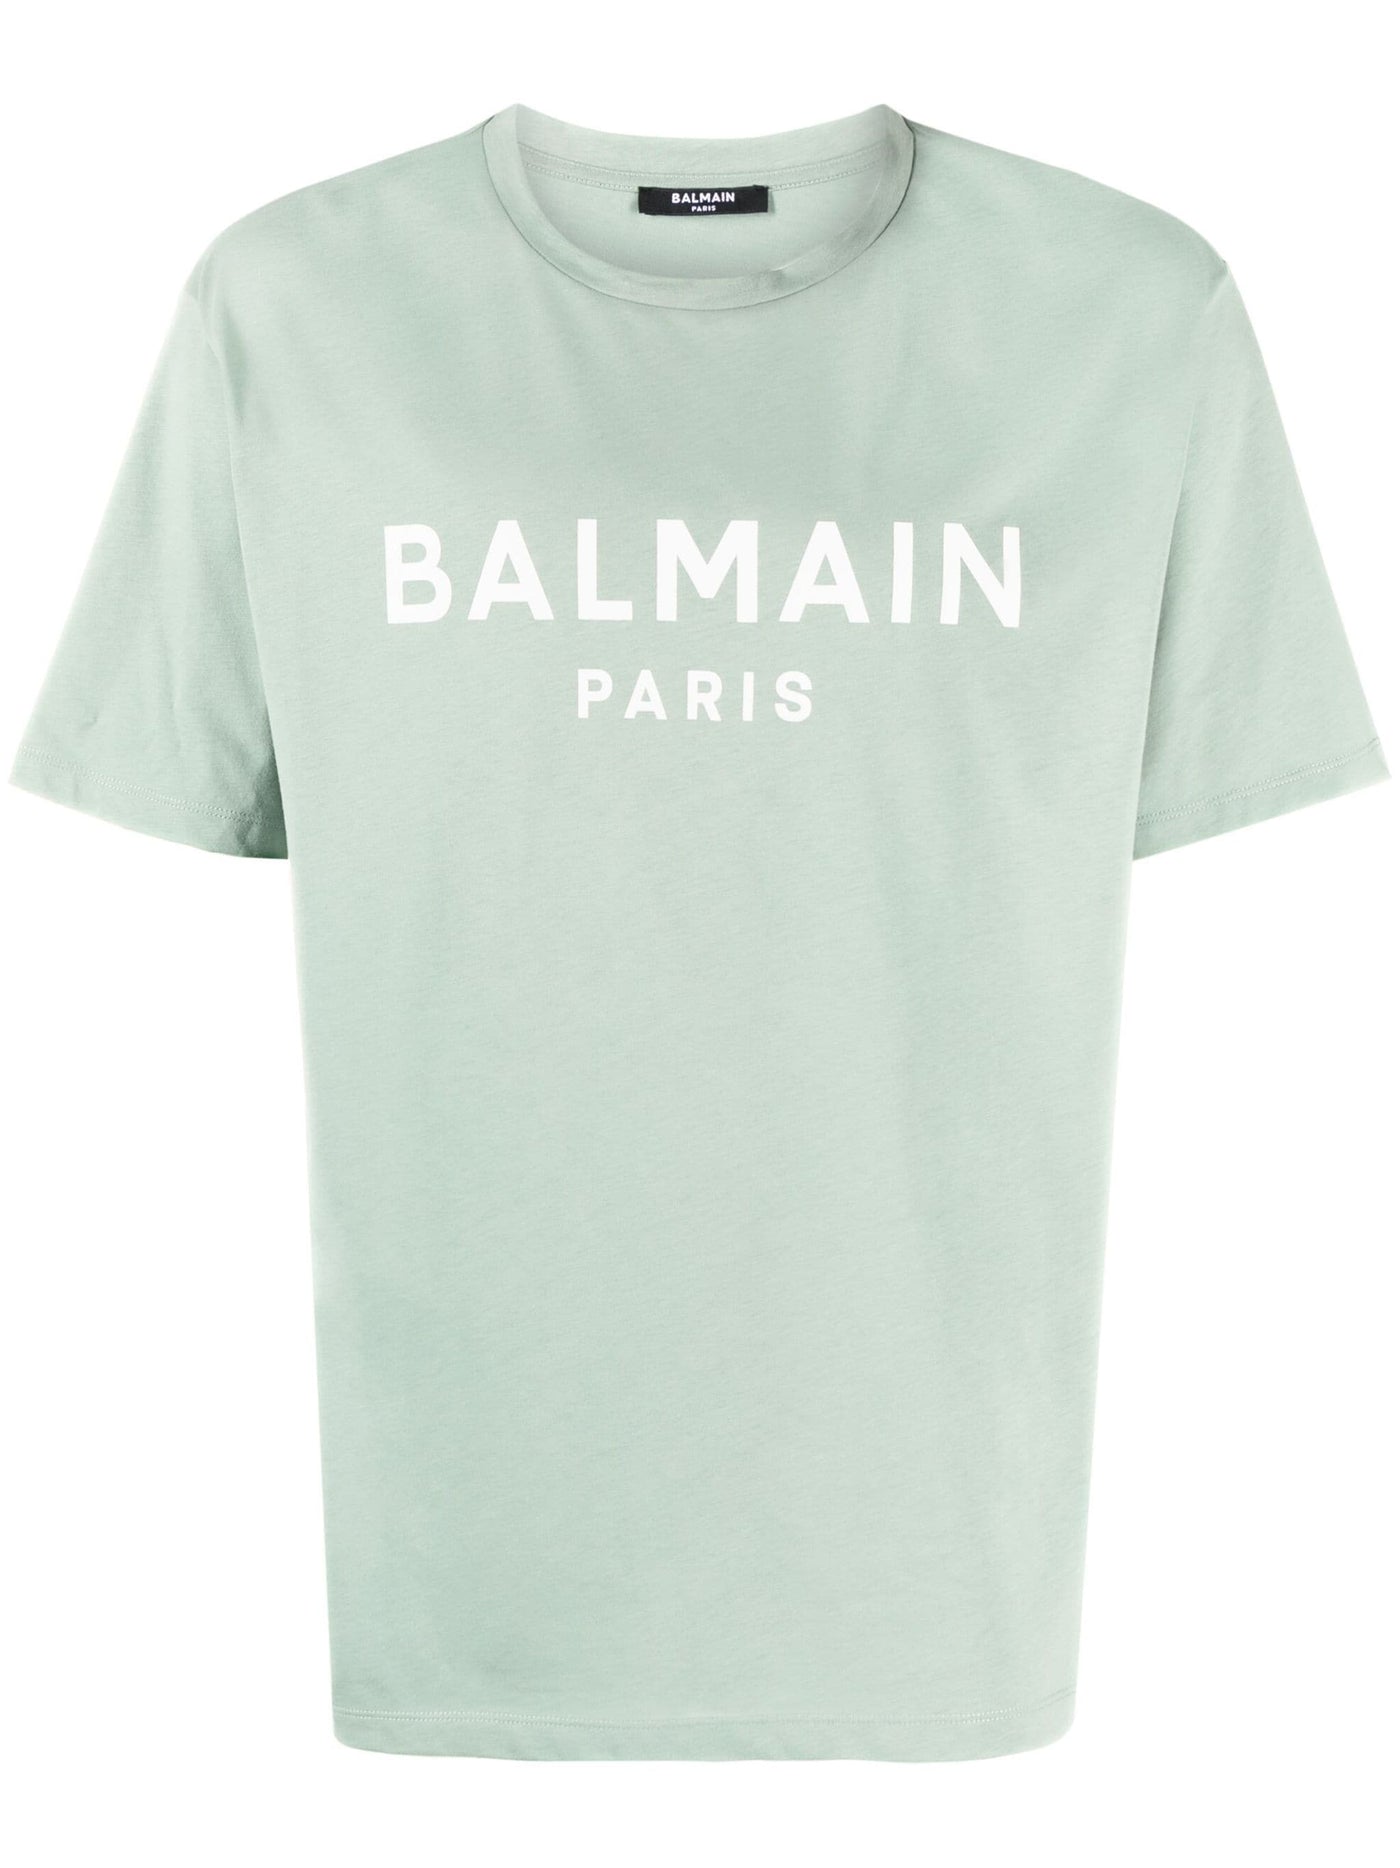 Balmain Paris Print Logo T-Shirt in Aqua Green